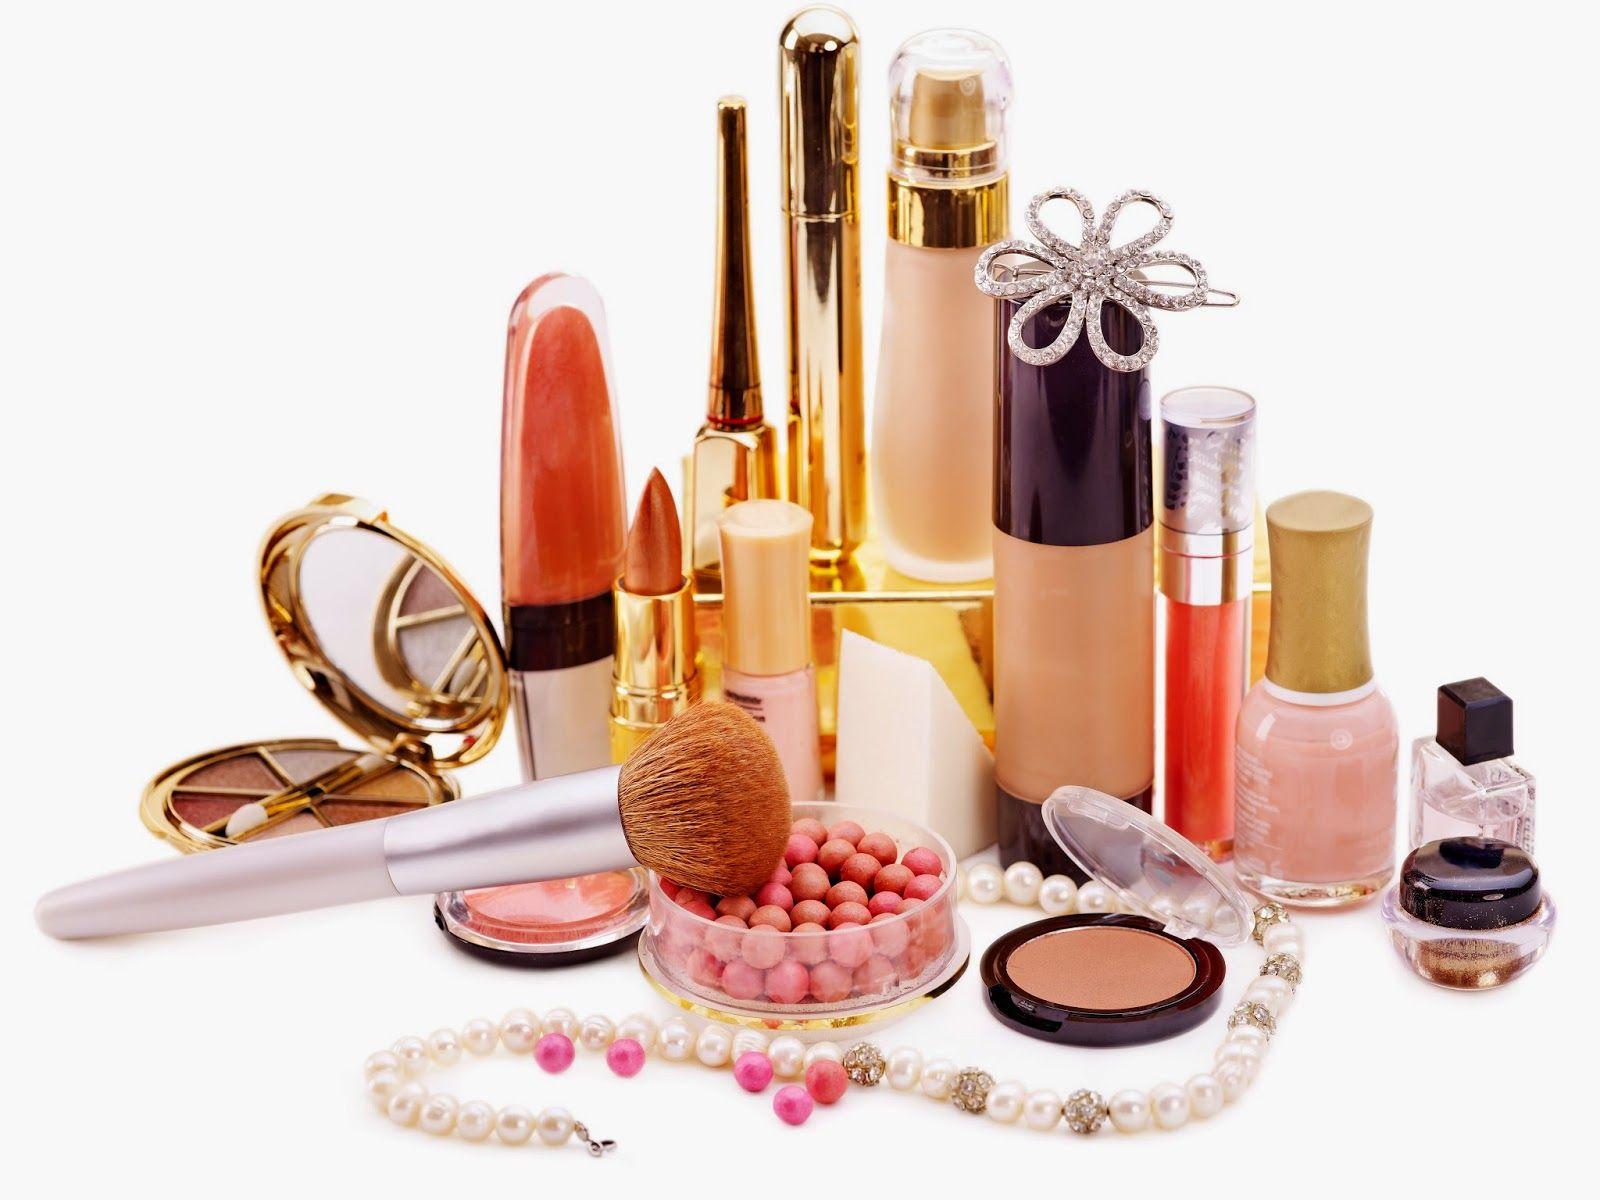 Beauty Makeup Wallpapers - Top Free Beauty Makeup Backgrounds -  WallpaperAccess